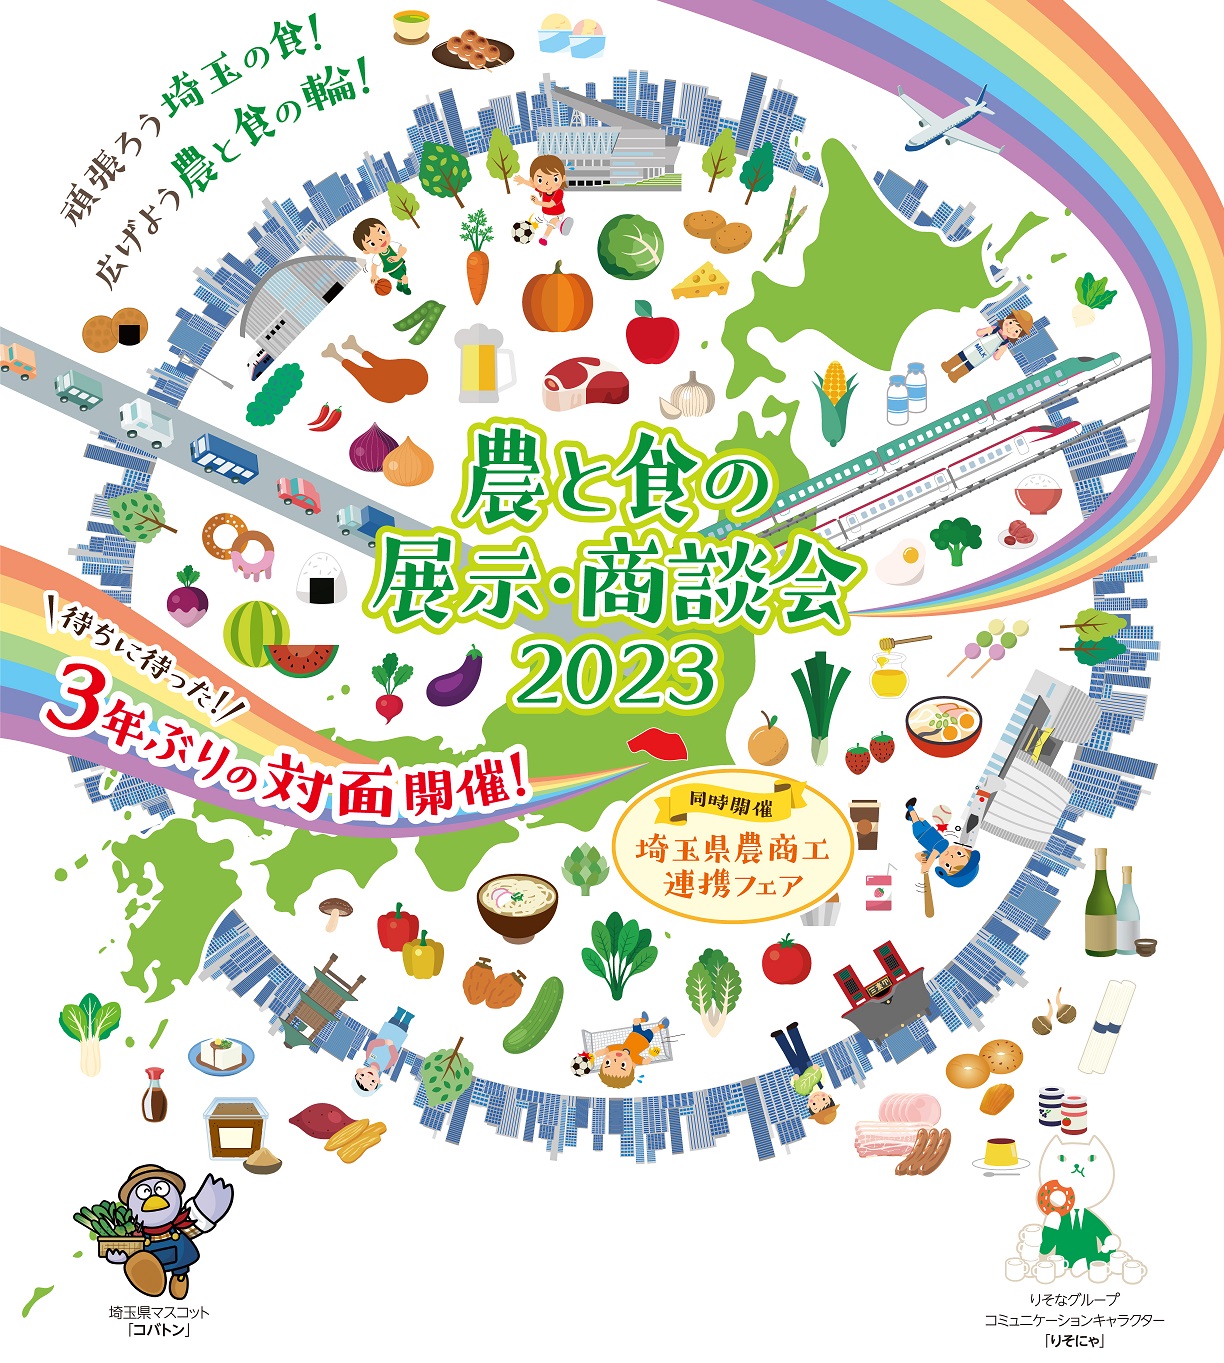 「農と食の展示・商談会2023」「埼玉県農商工連携フェア」"